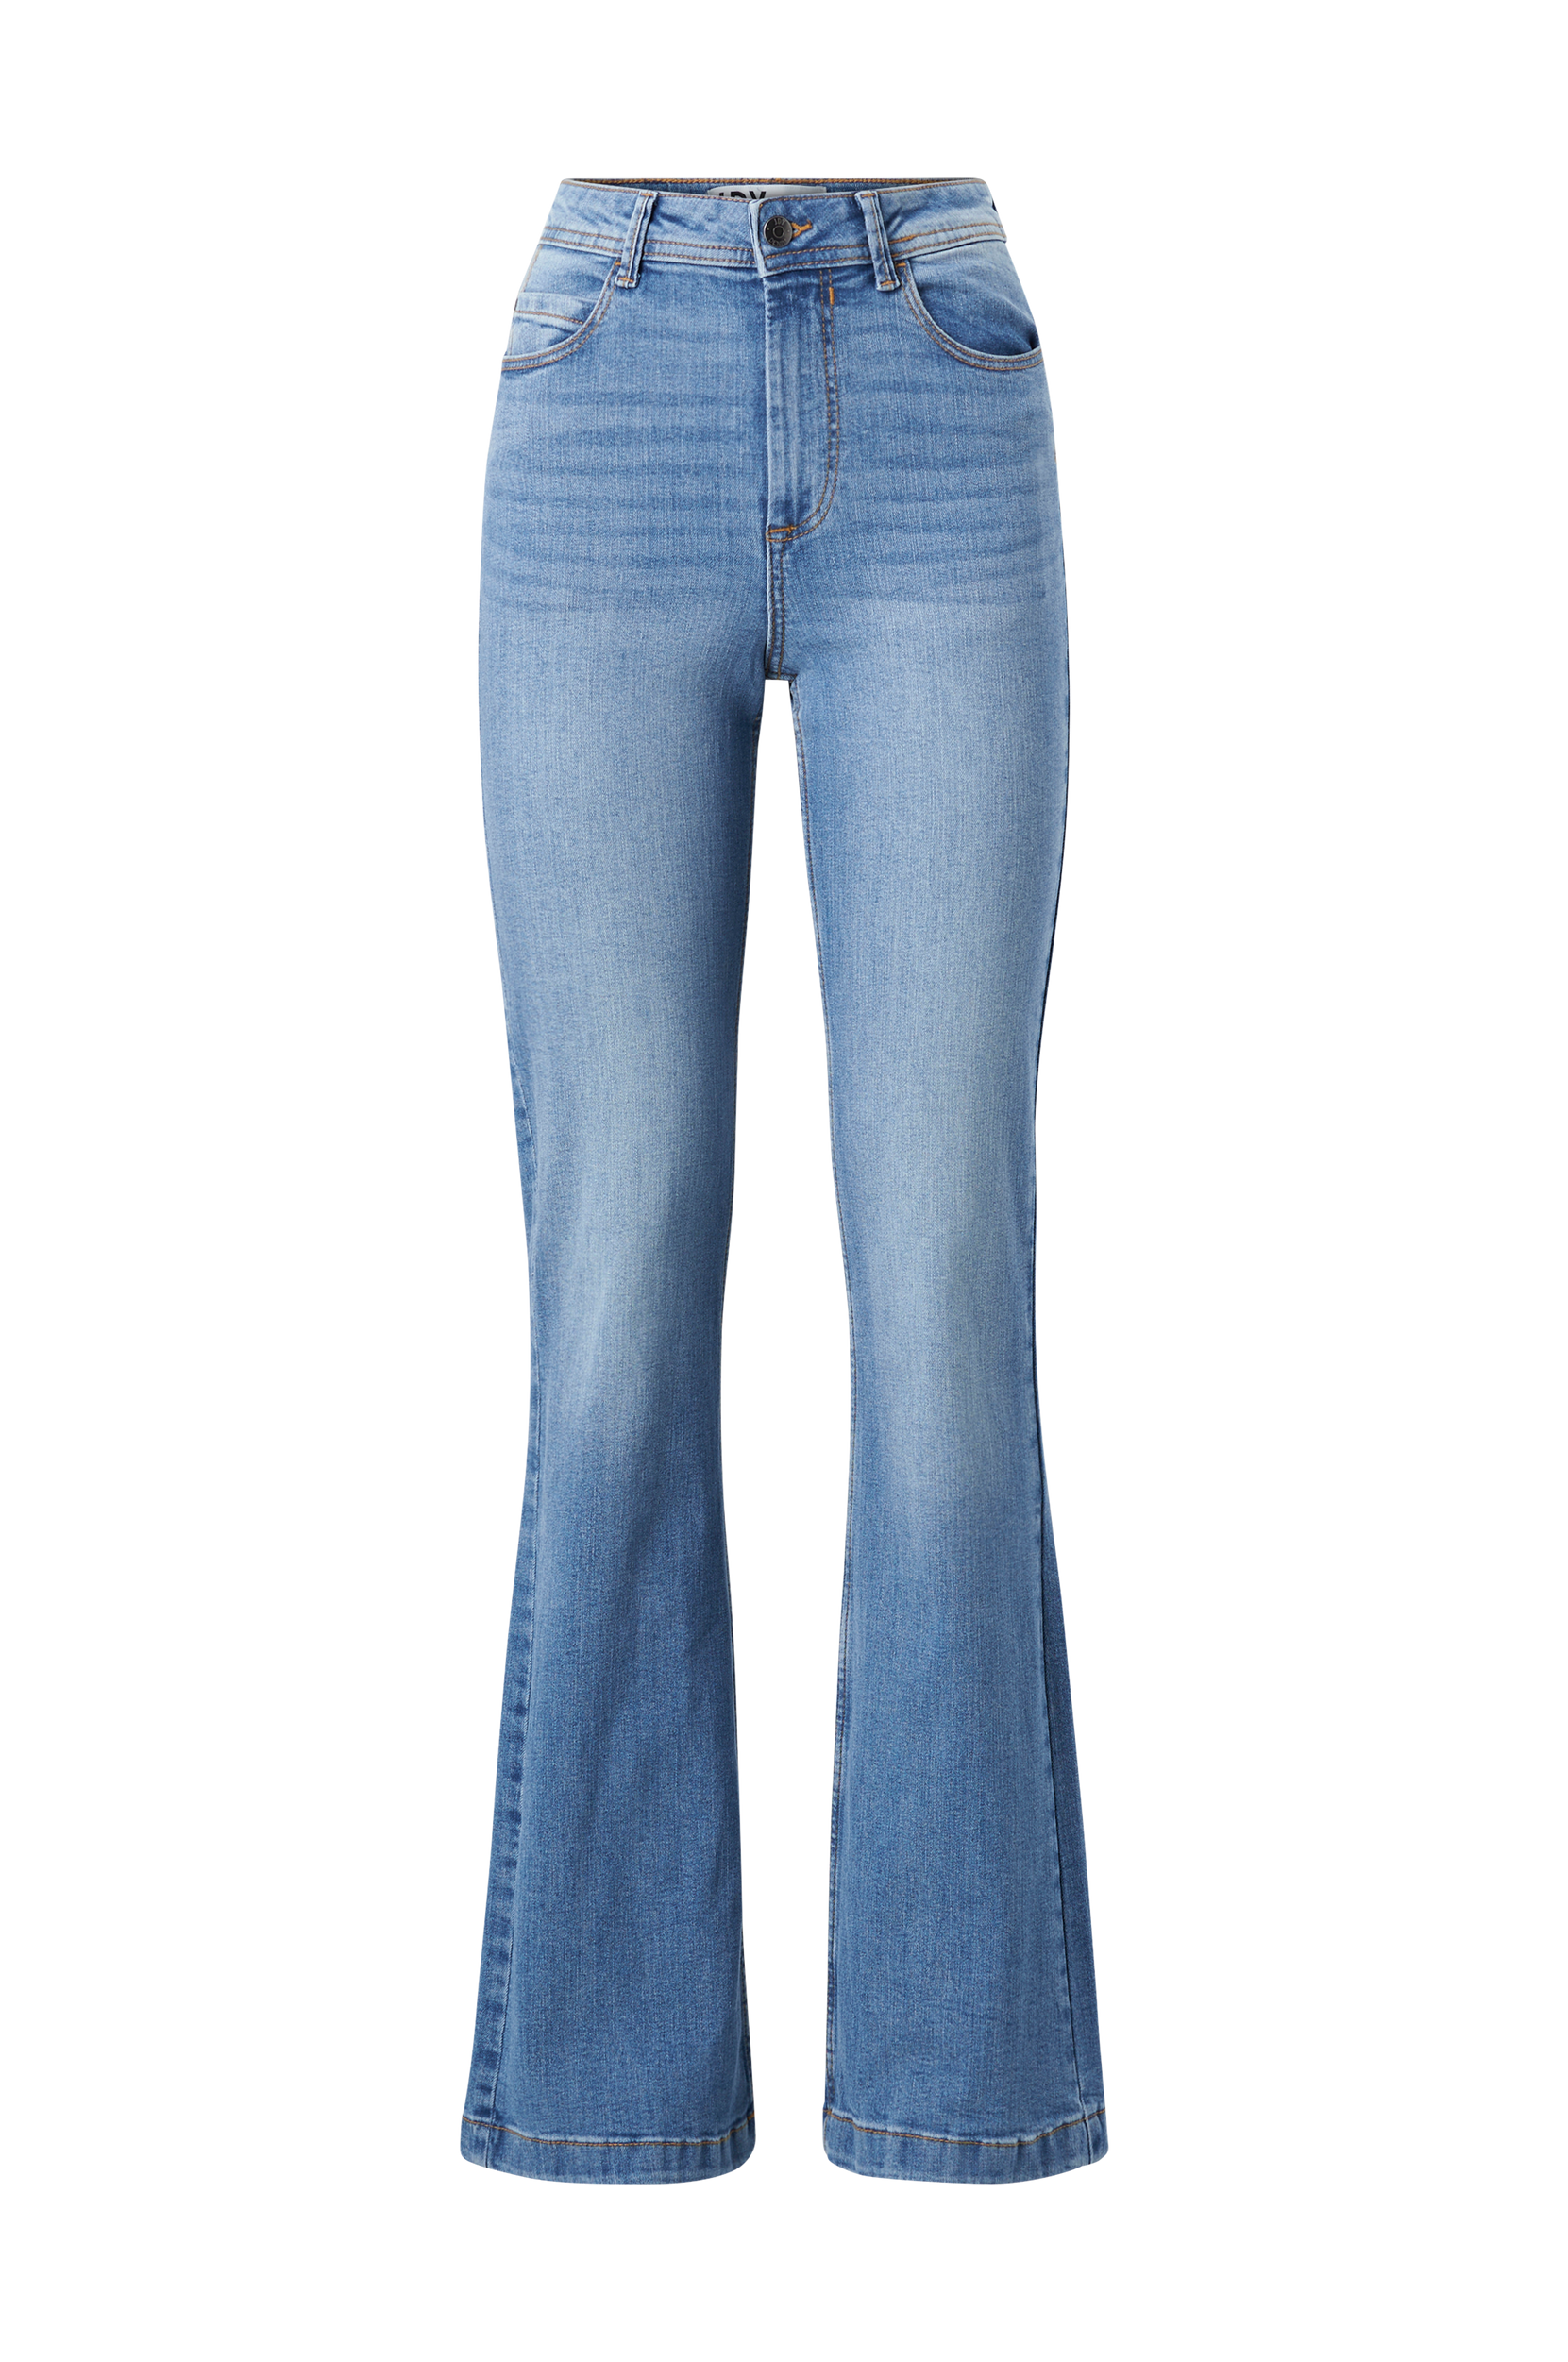 JDY - Jeans jdyFlora Flared High - Blå - W32/L34